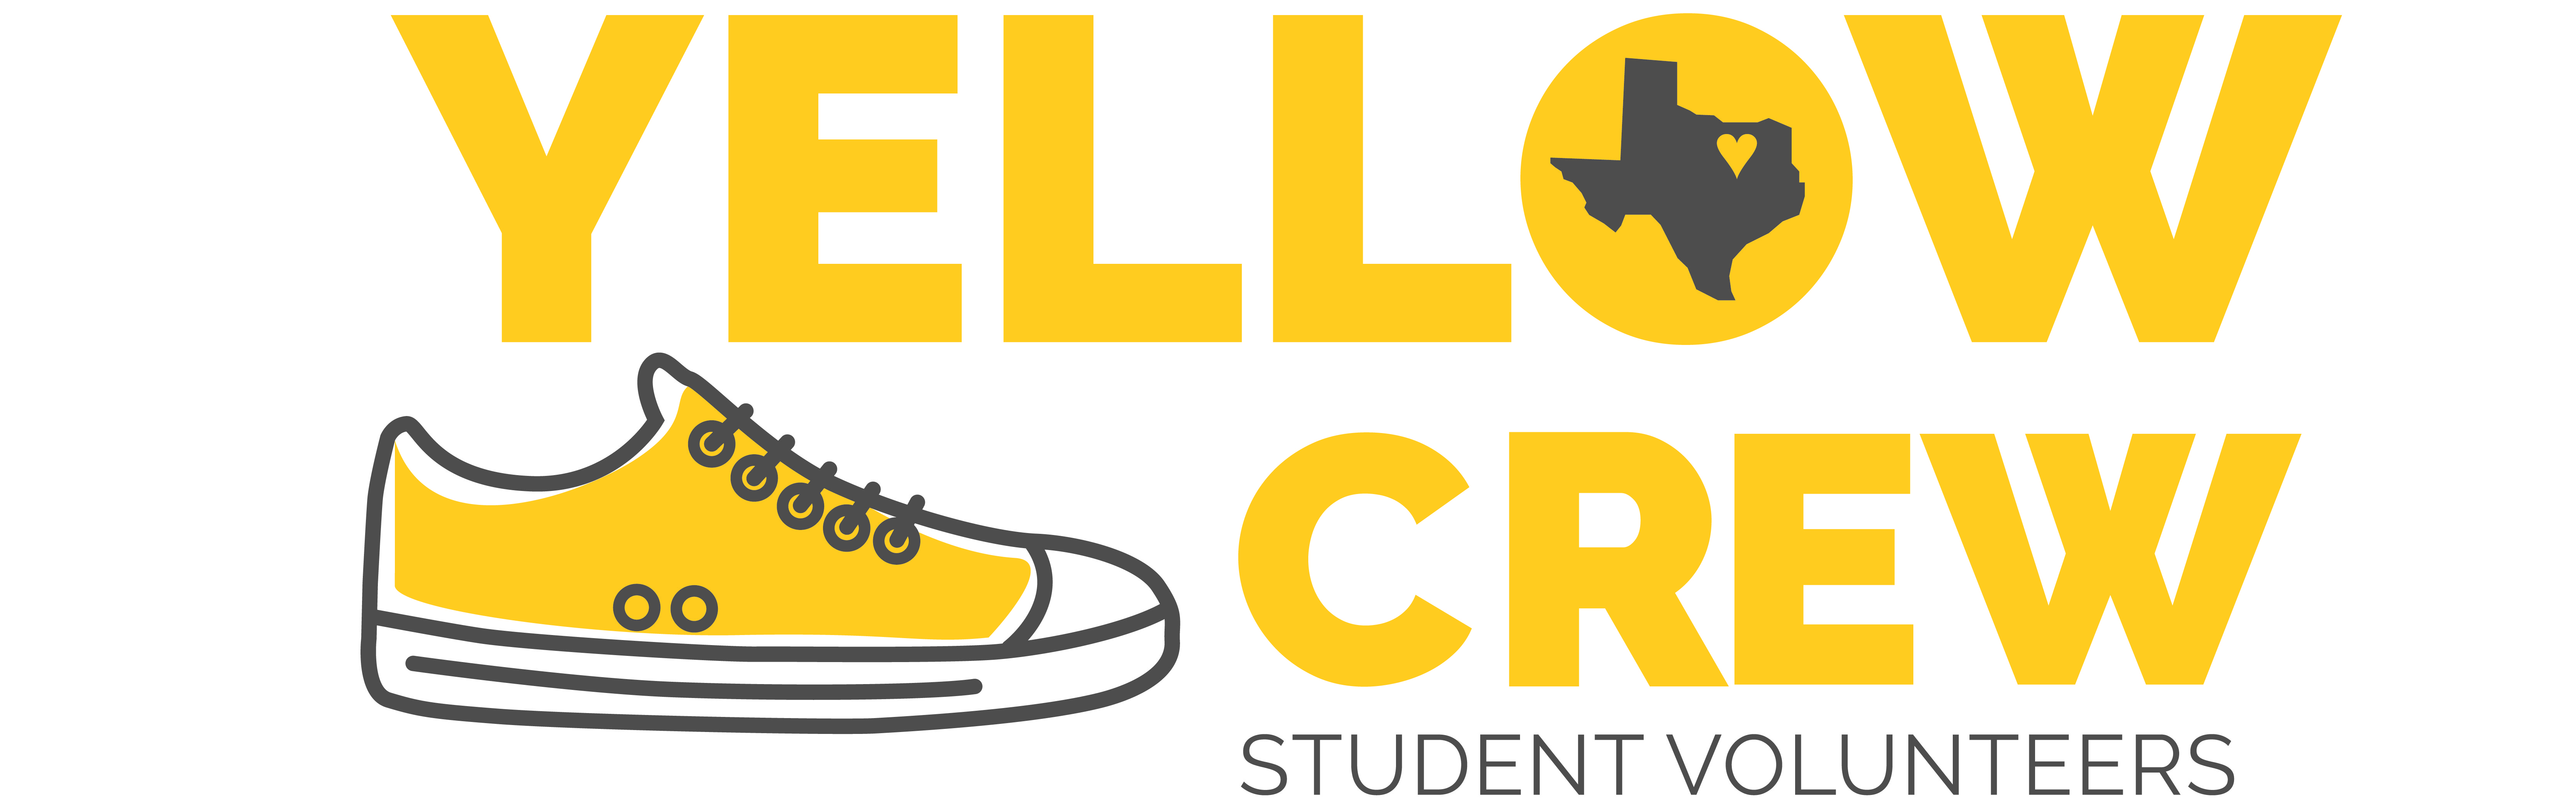 Yellow Shoe Crew logo